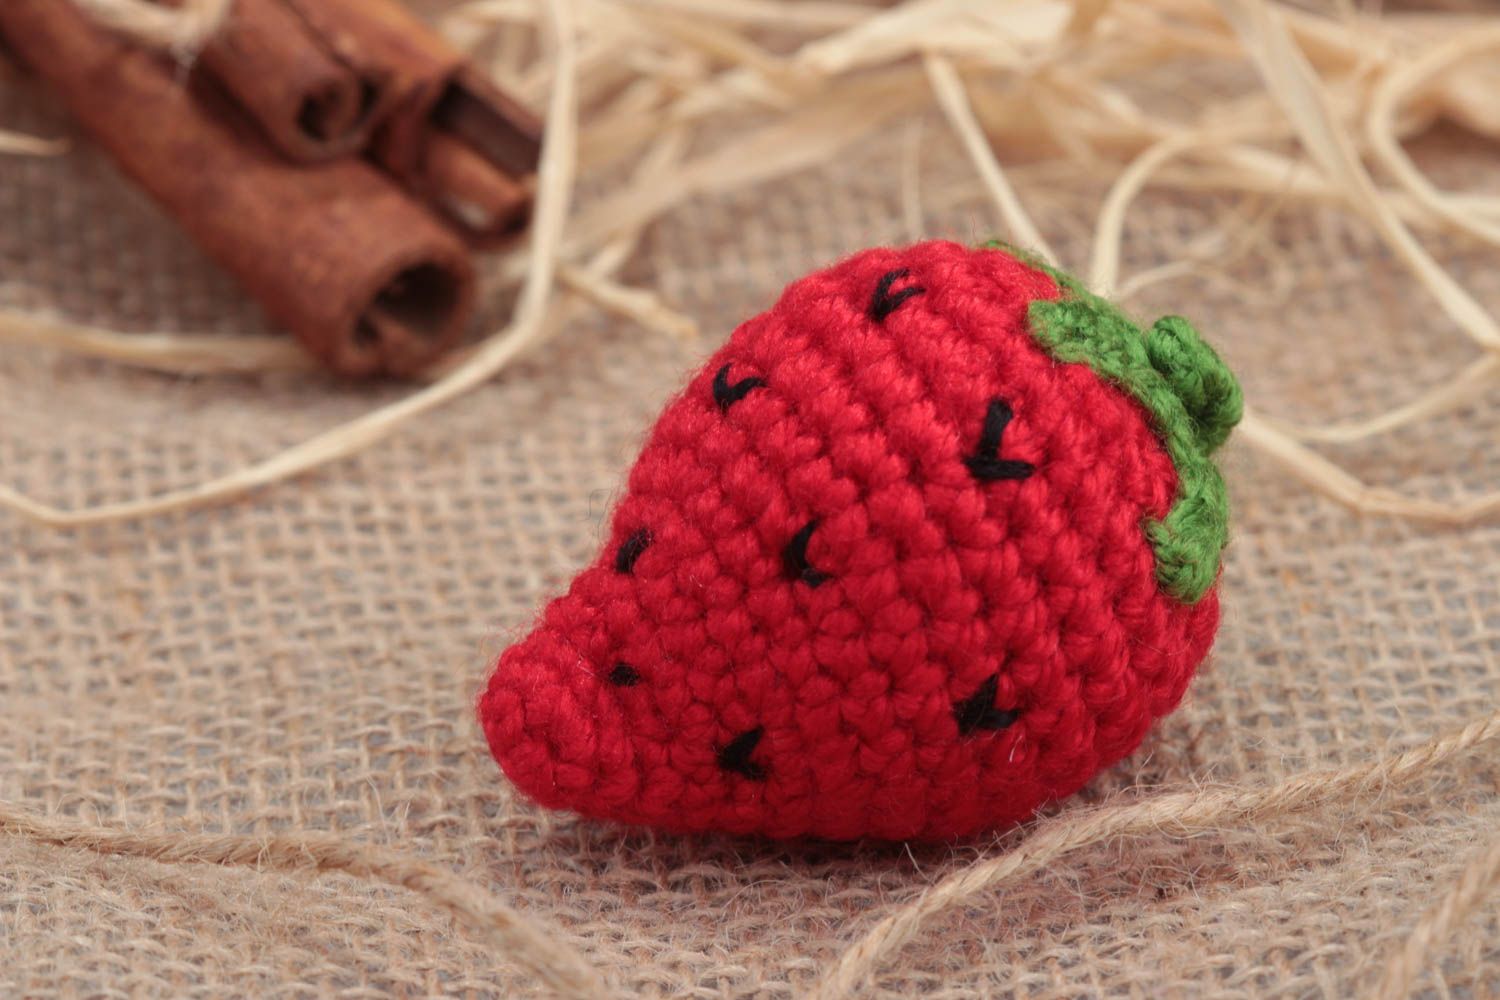 Handmade small designer crochet soft toy strawberry for kids and interior decor photo 1